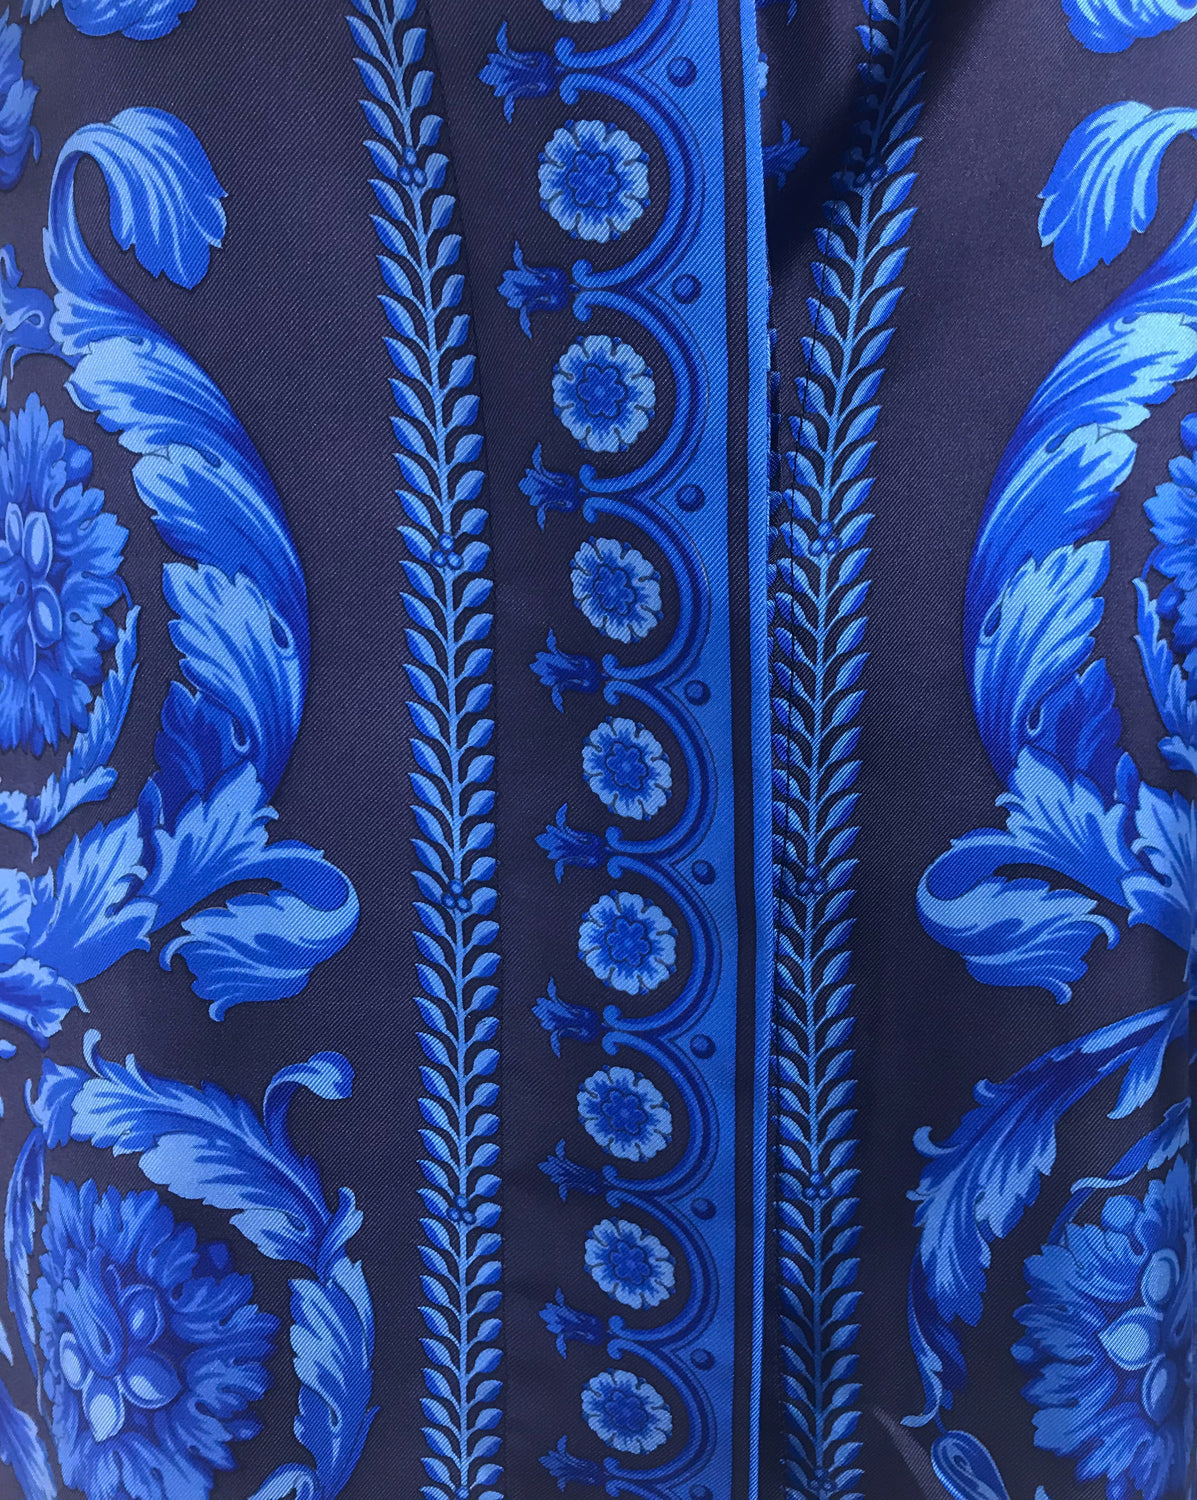 Fruit Vintage Gianni Versace Blue Baroque Print Silk Shirt Blouse